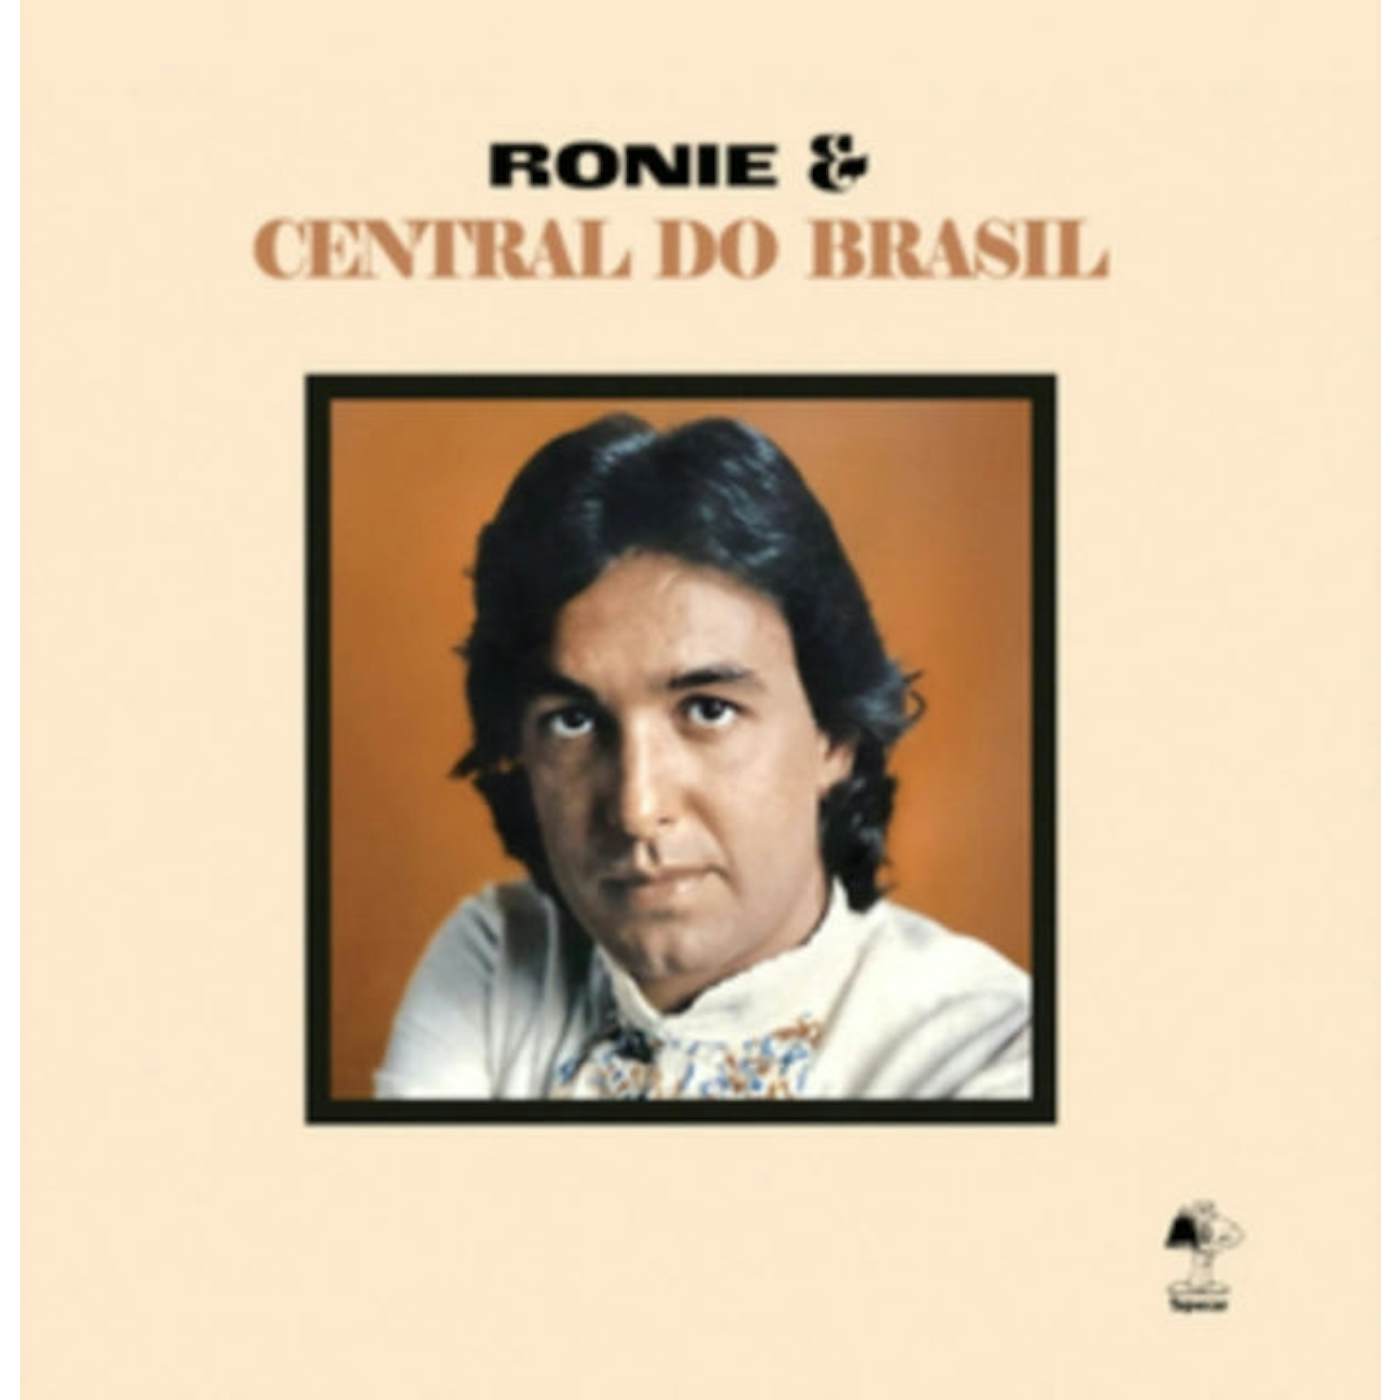 Ronie & Central Do Brasil LP - Ronie & Central Do Brasil (Vinyl)